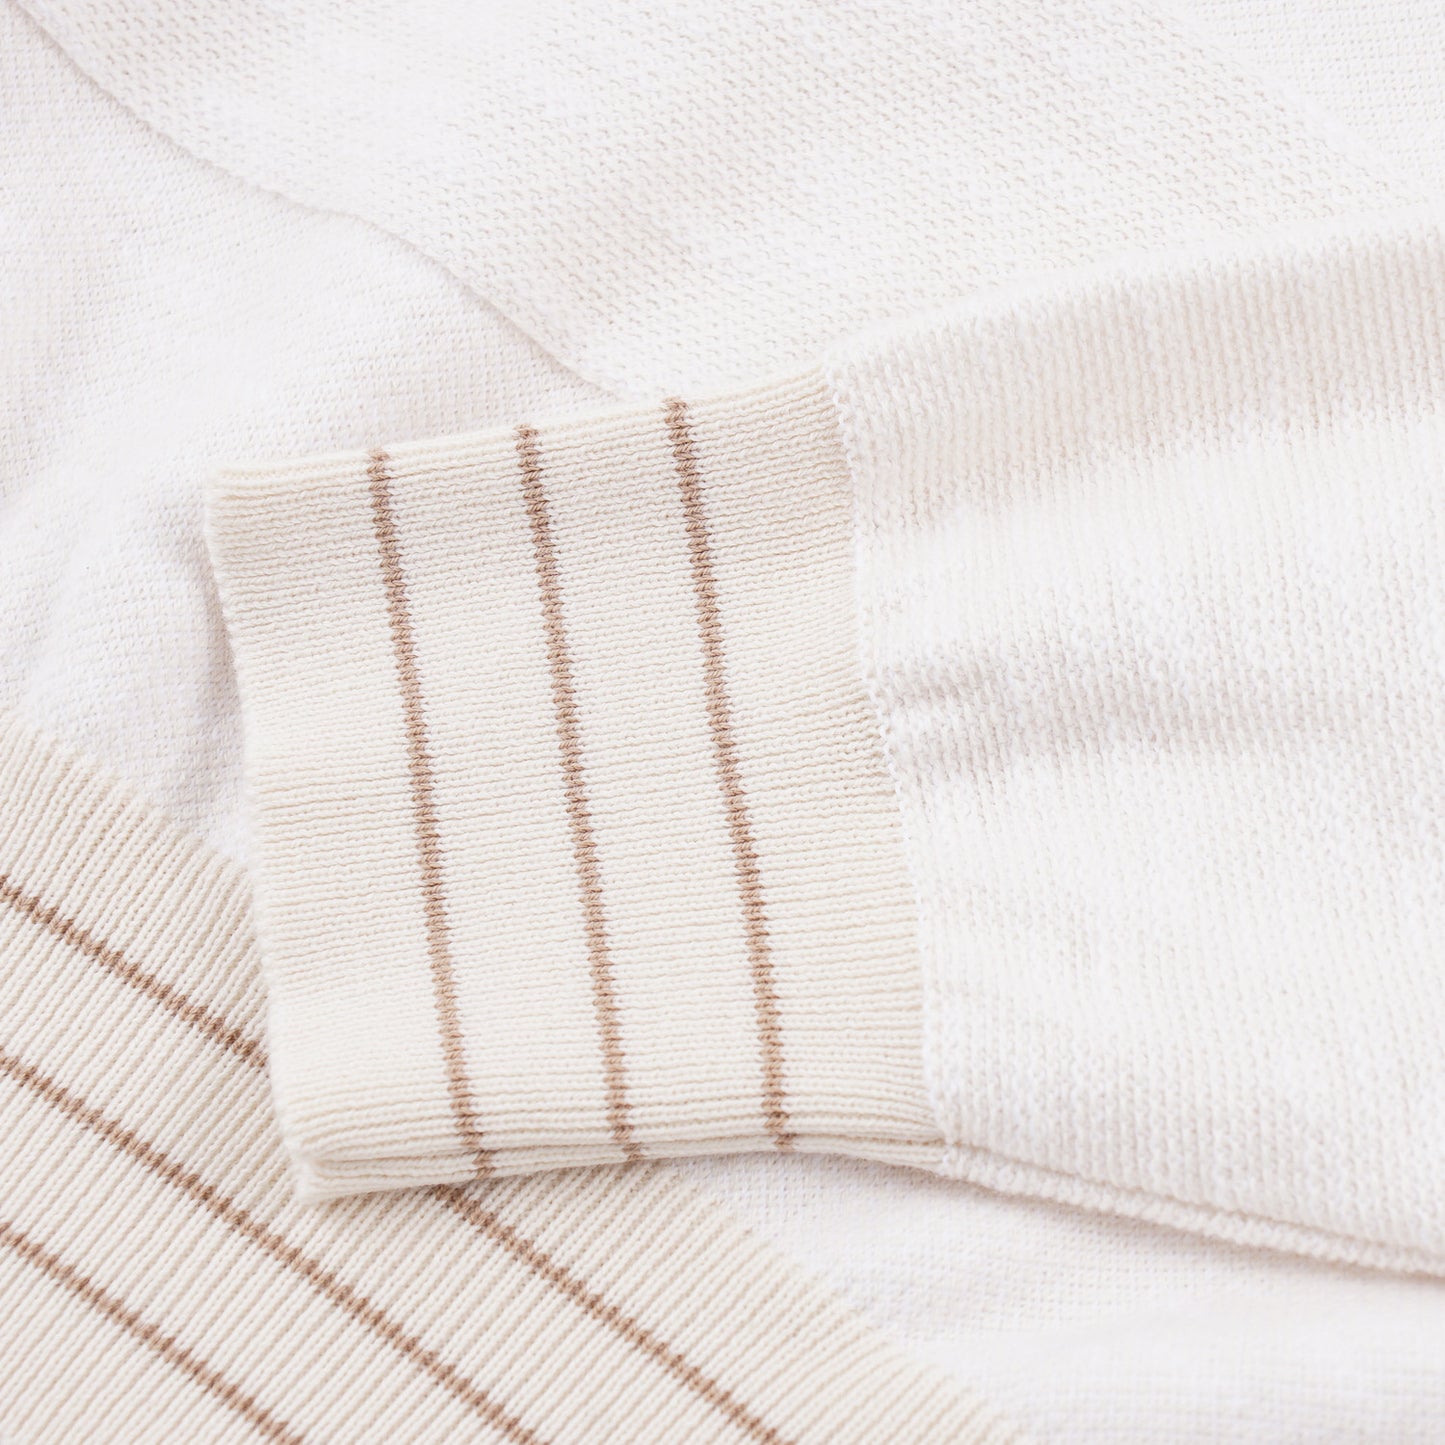 Peserico Knit Block Stripe Cotton Sweater - Top Shelf Apparel